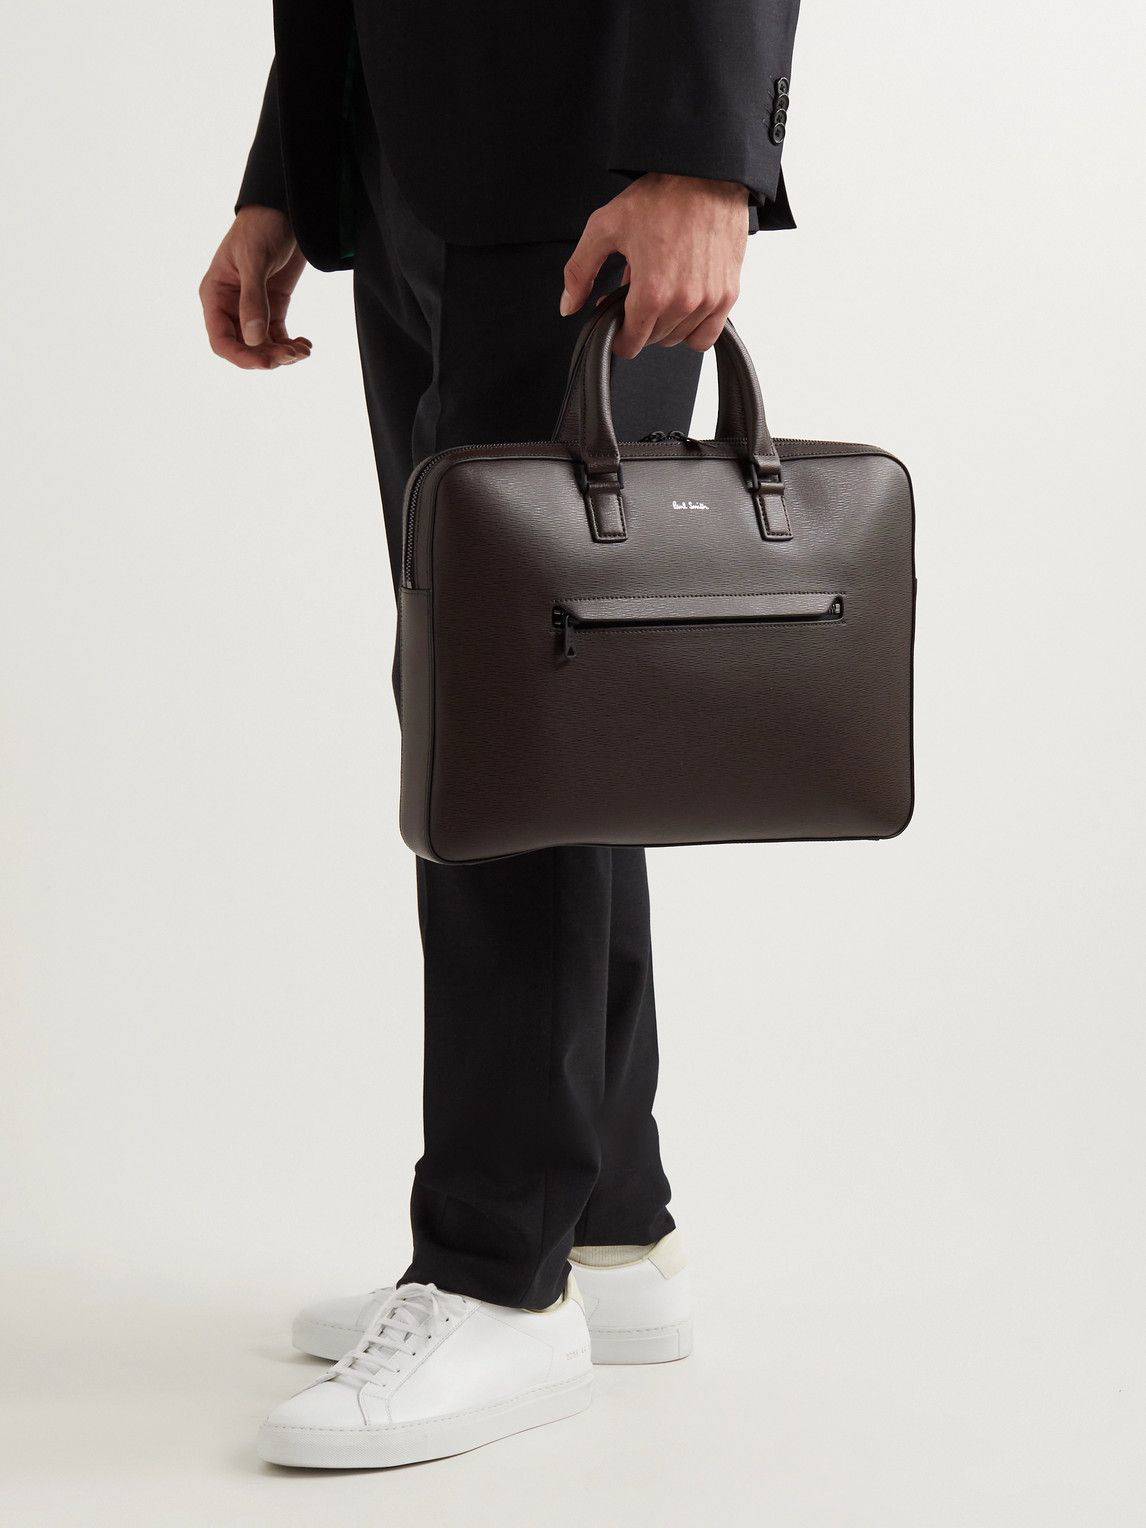 Paul Smith Authenticated Leather Handbag